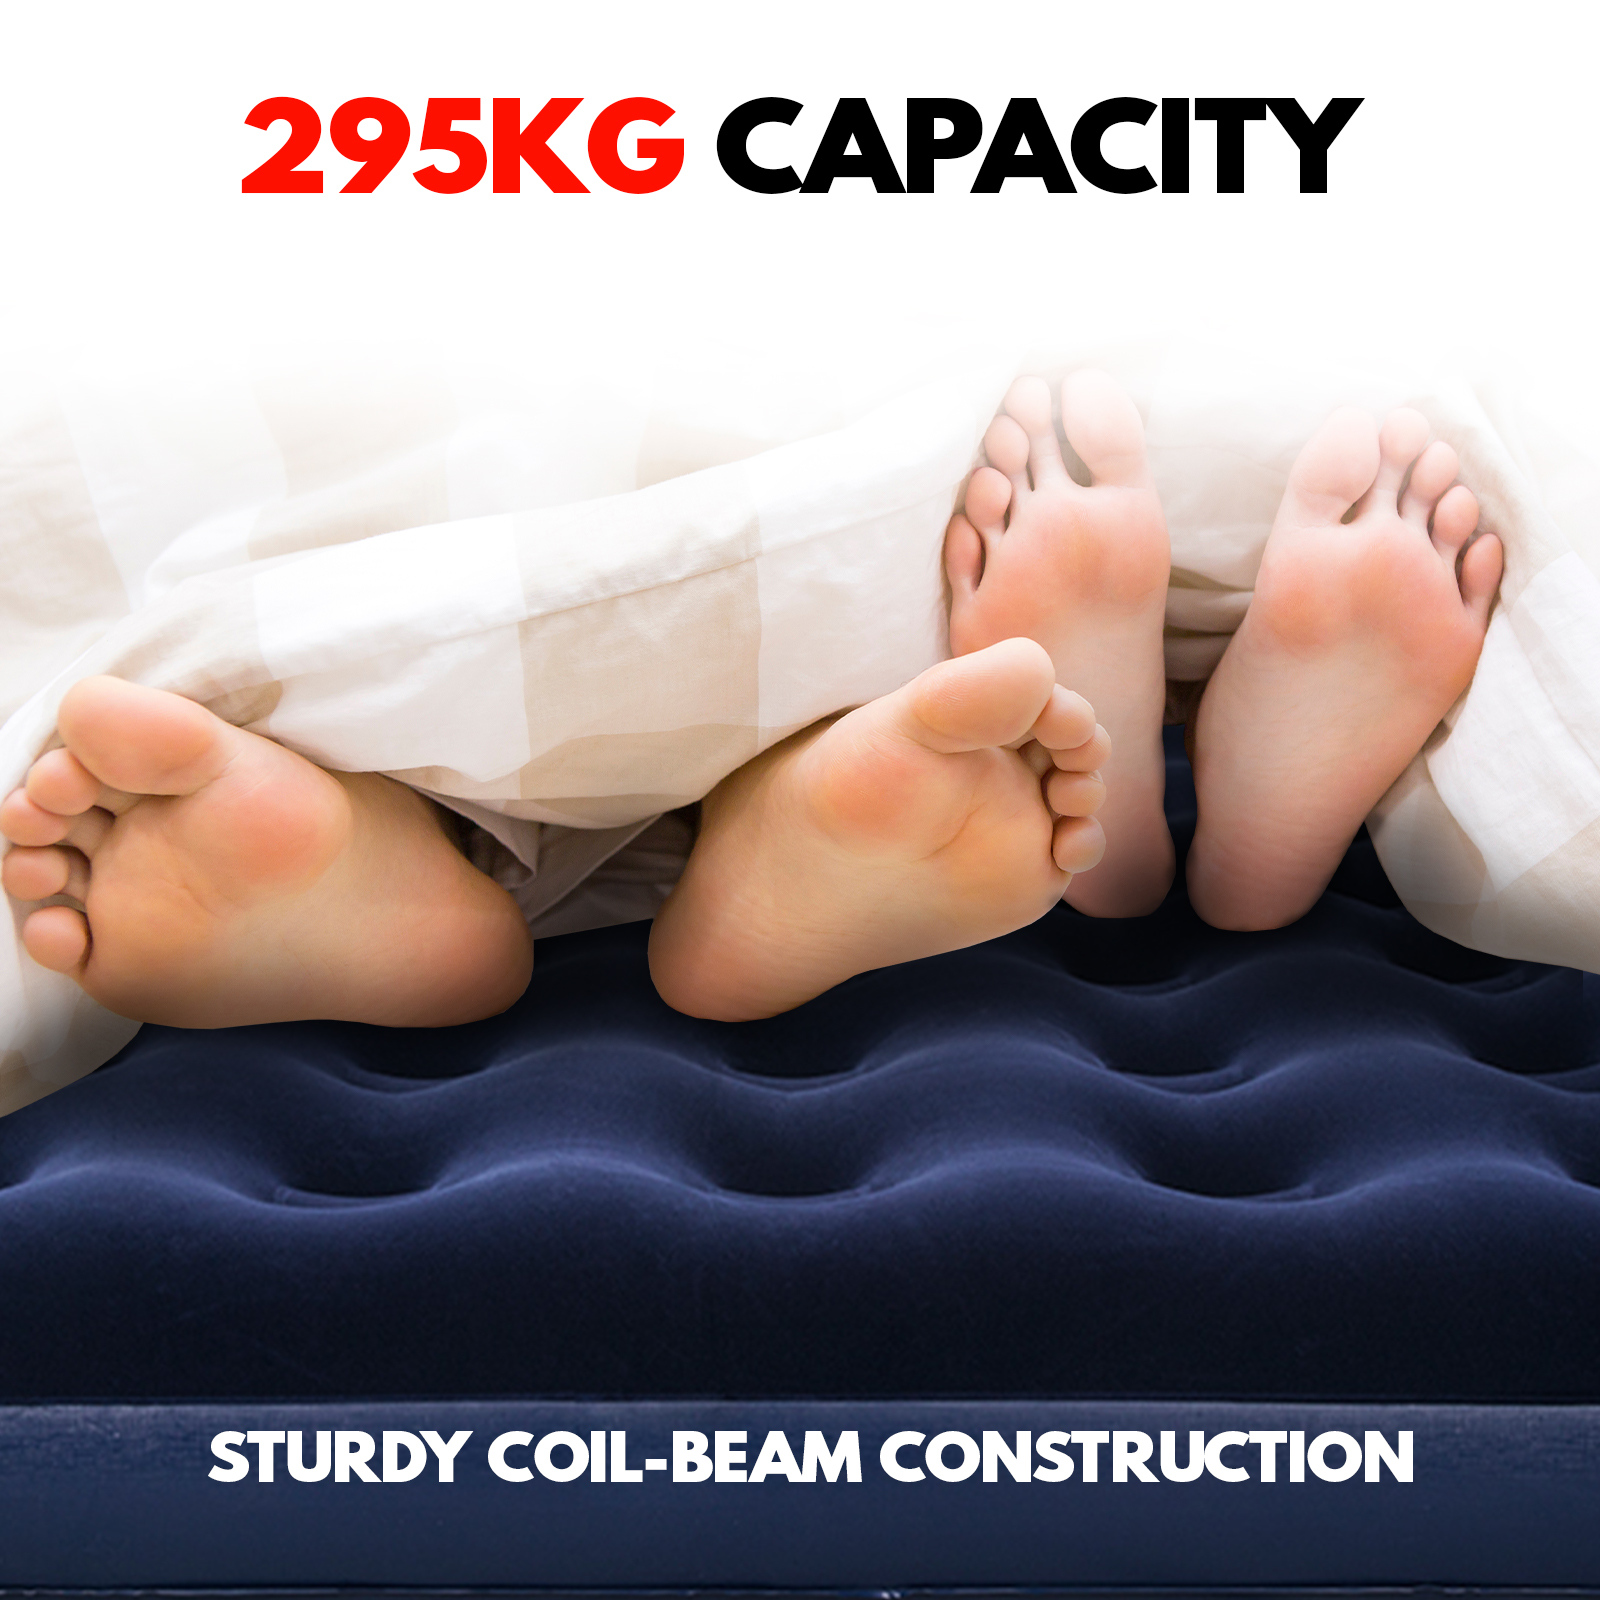 Queen Size Bed Inflatable Air Mattress Sleeping Mat 22CM Thick - Navy